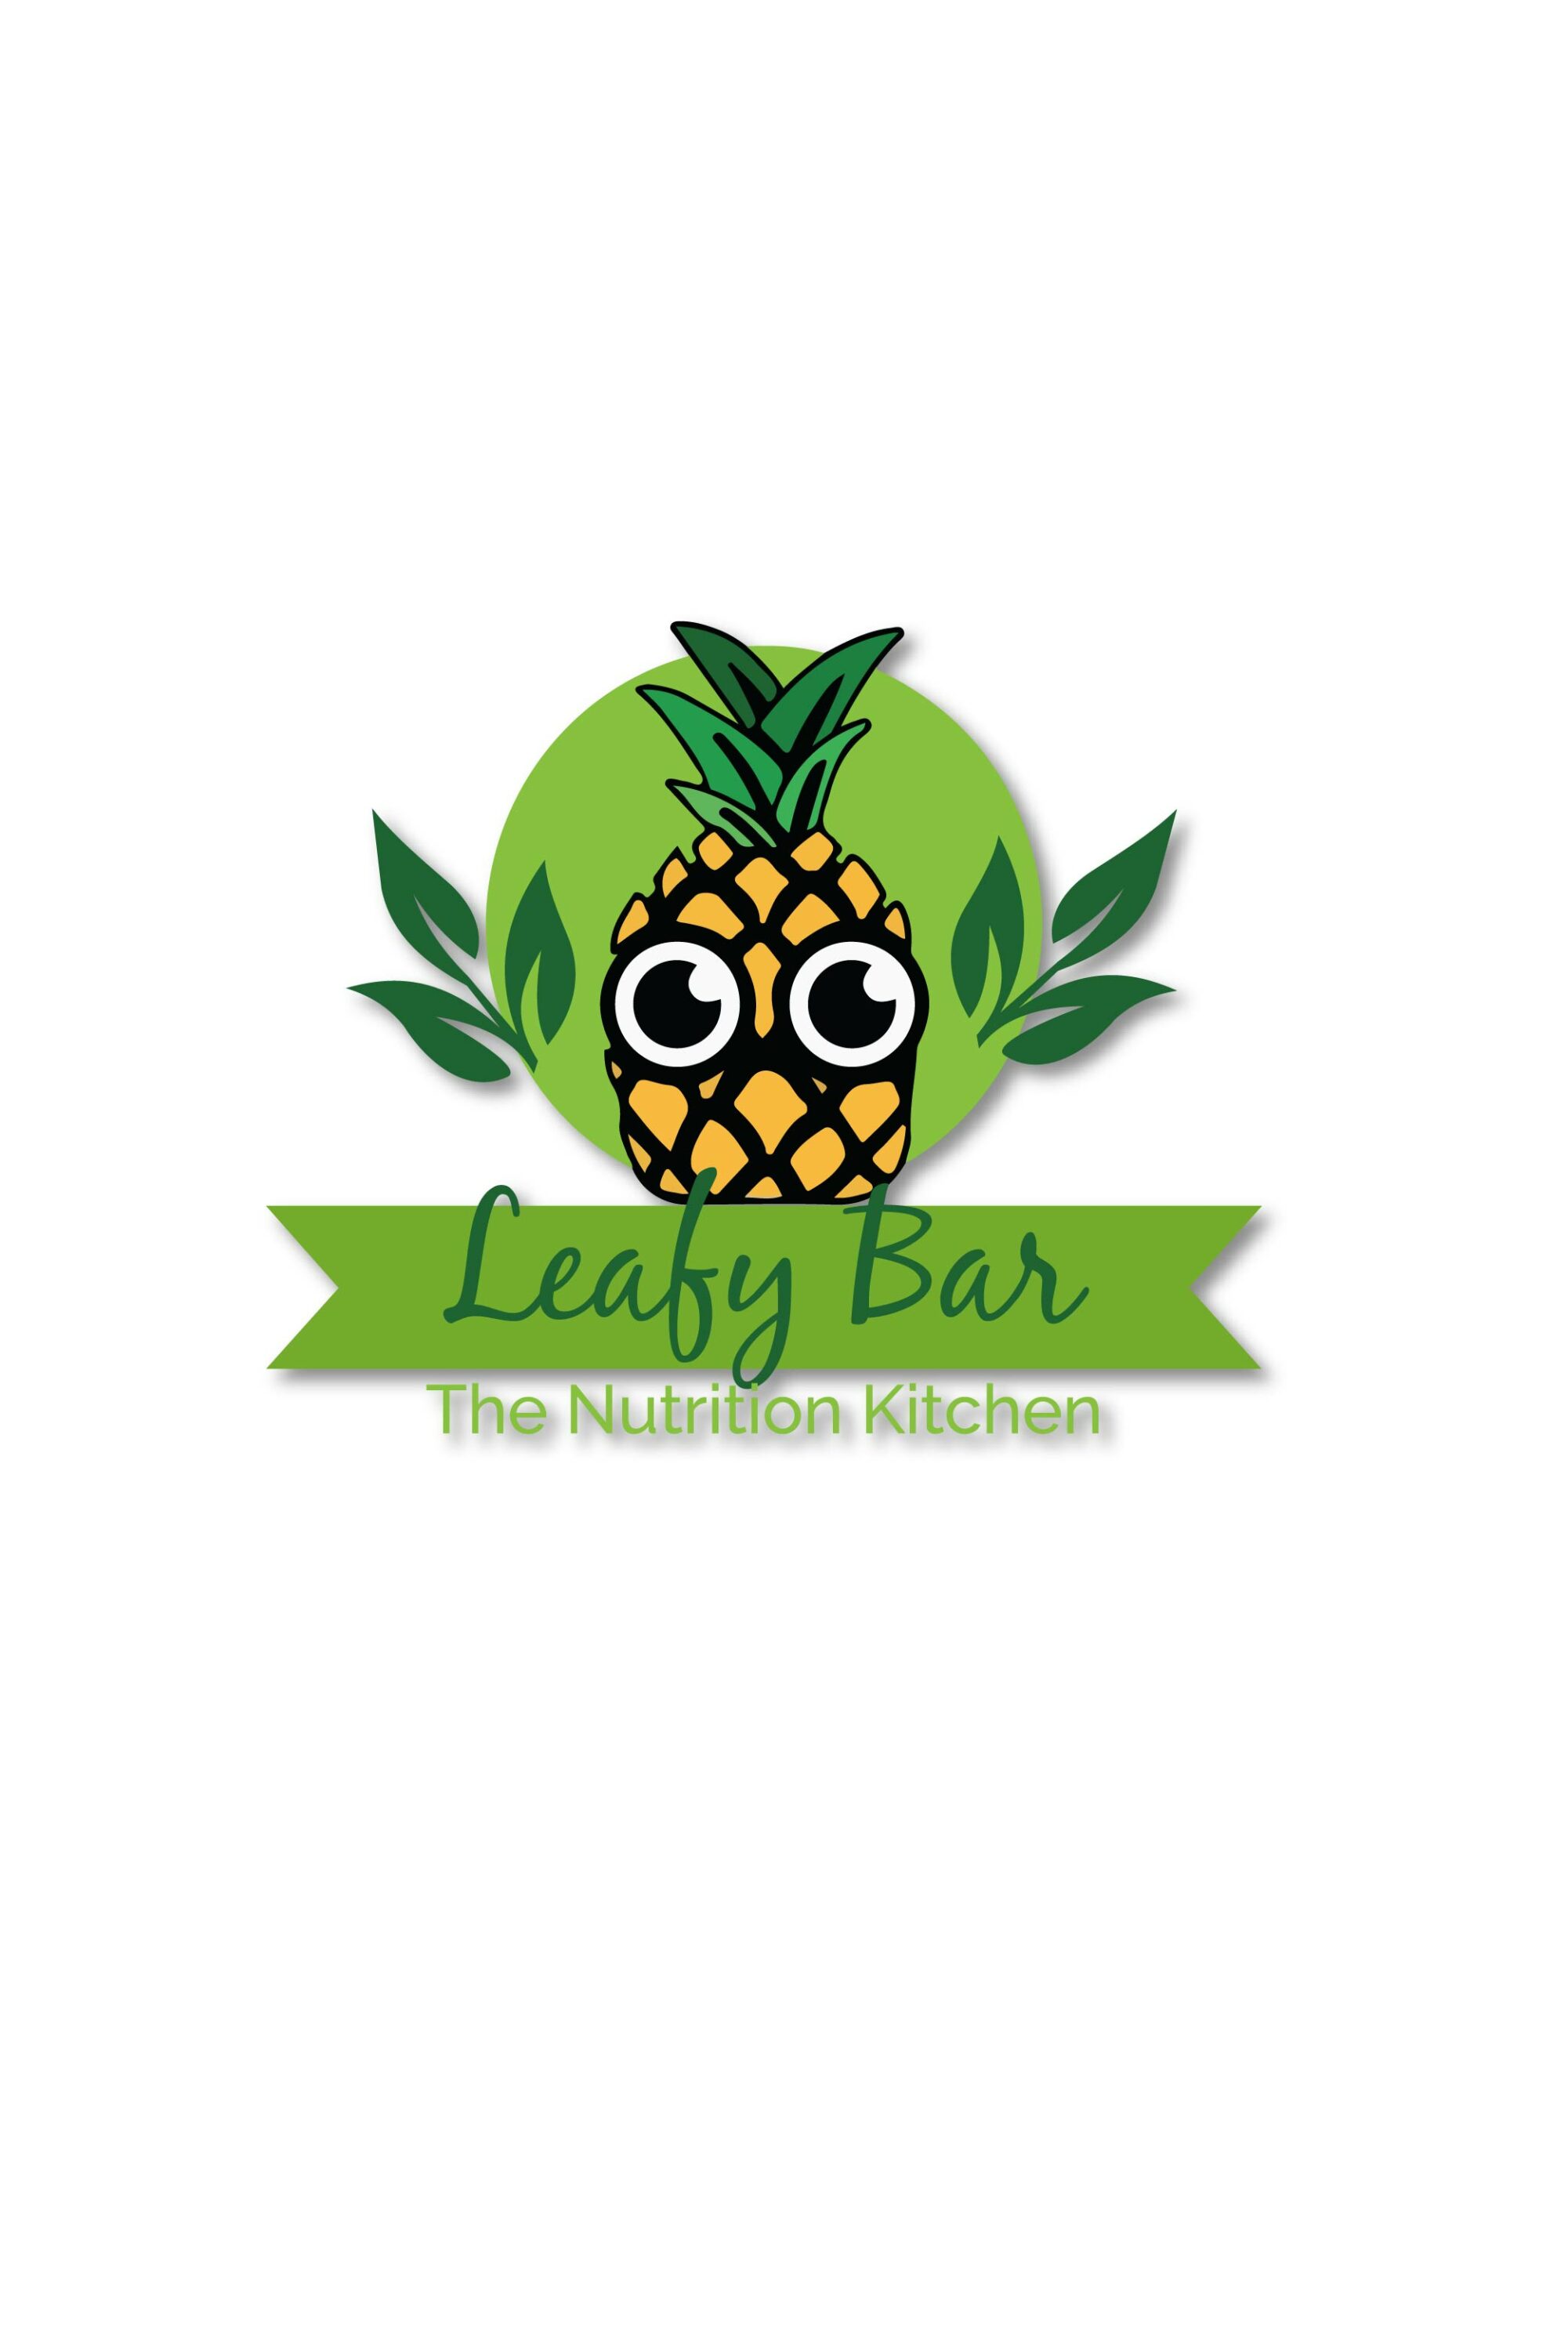 Pineapple Leafy Bar Logo Template Pinterest Image.